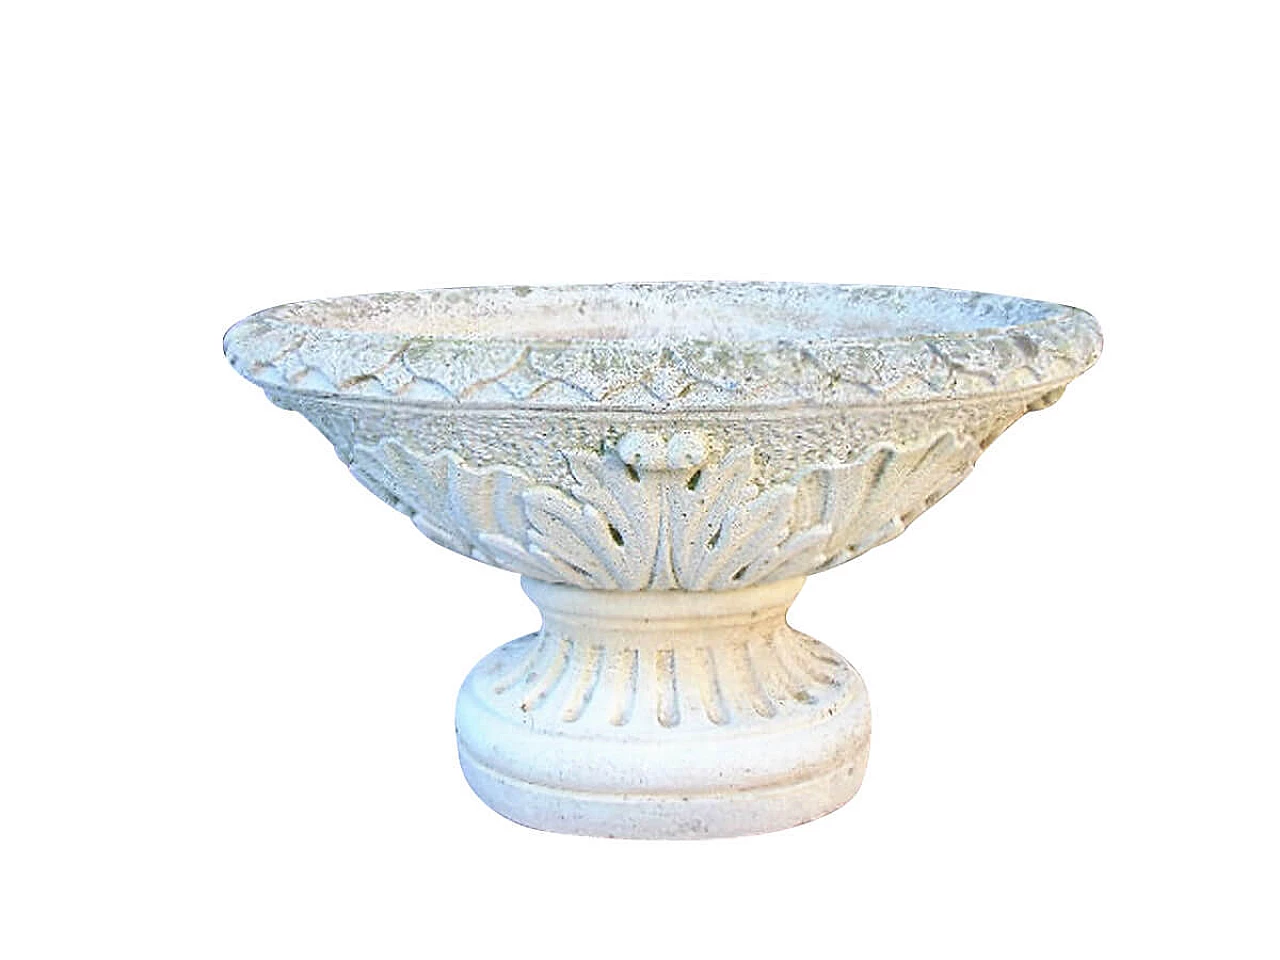 Oval-shaped concrete flower vase 1117165